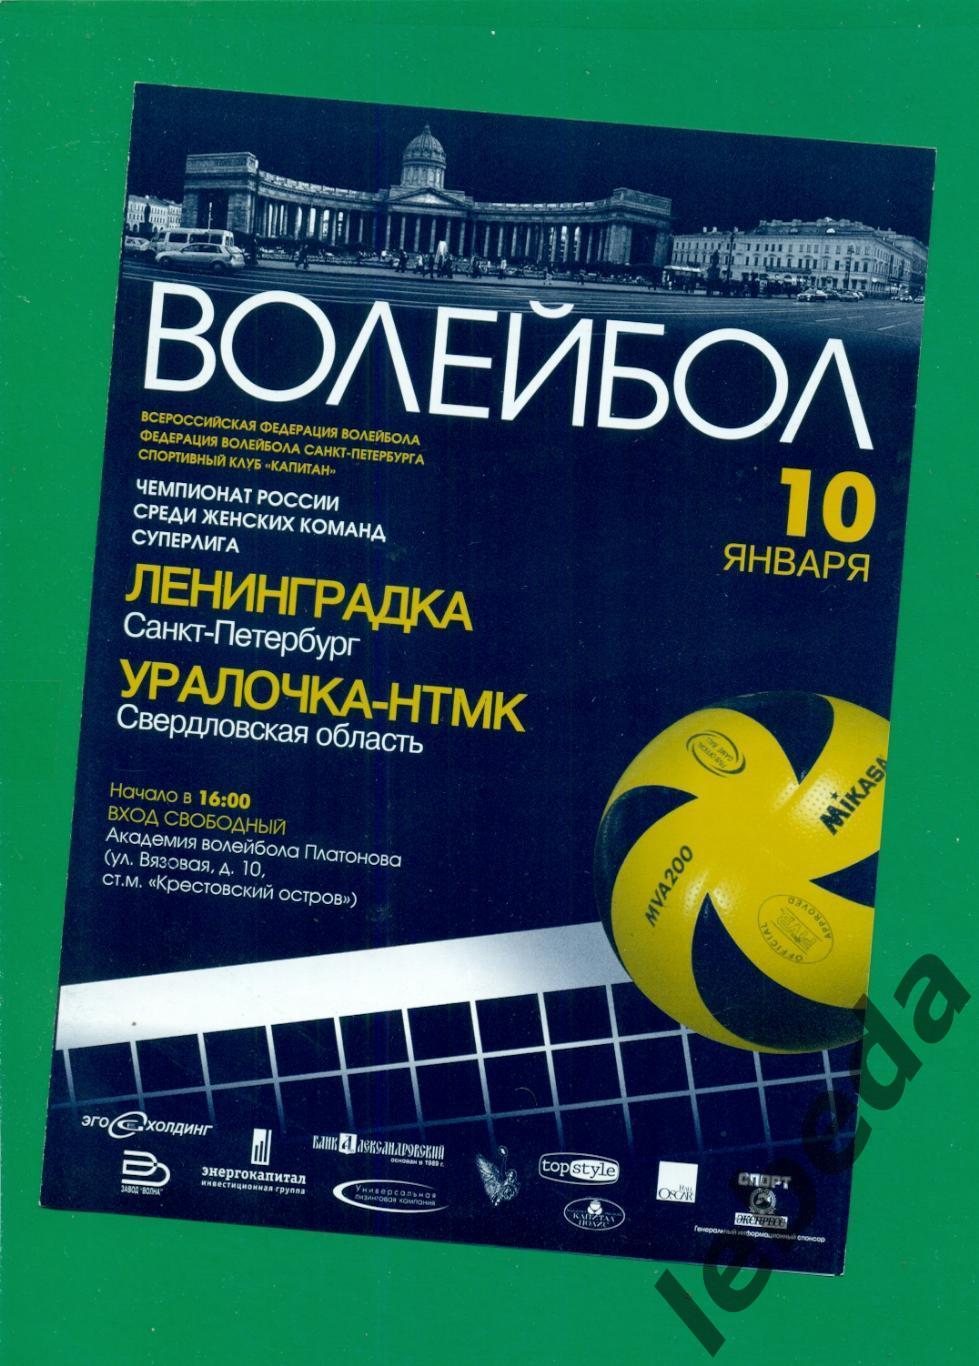 Ленинградка ( Санкт-Петербург ) - Уралочка Екатеринбург - 2010 г. ( 10.01.10.)